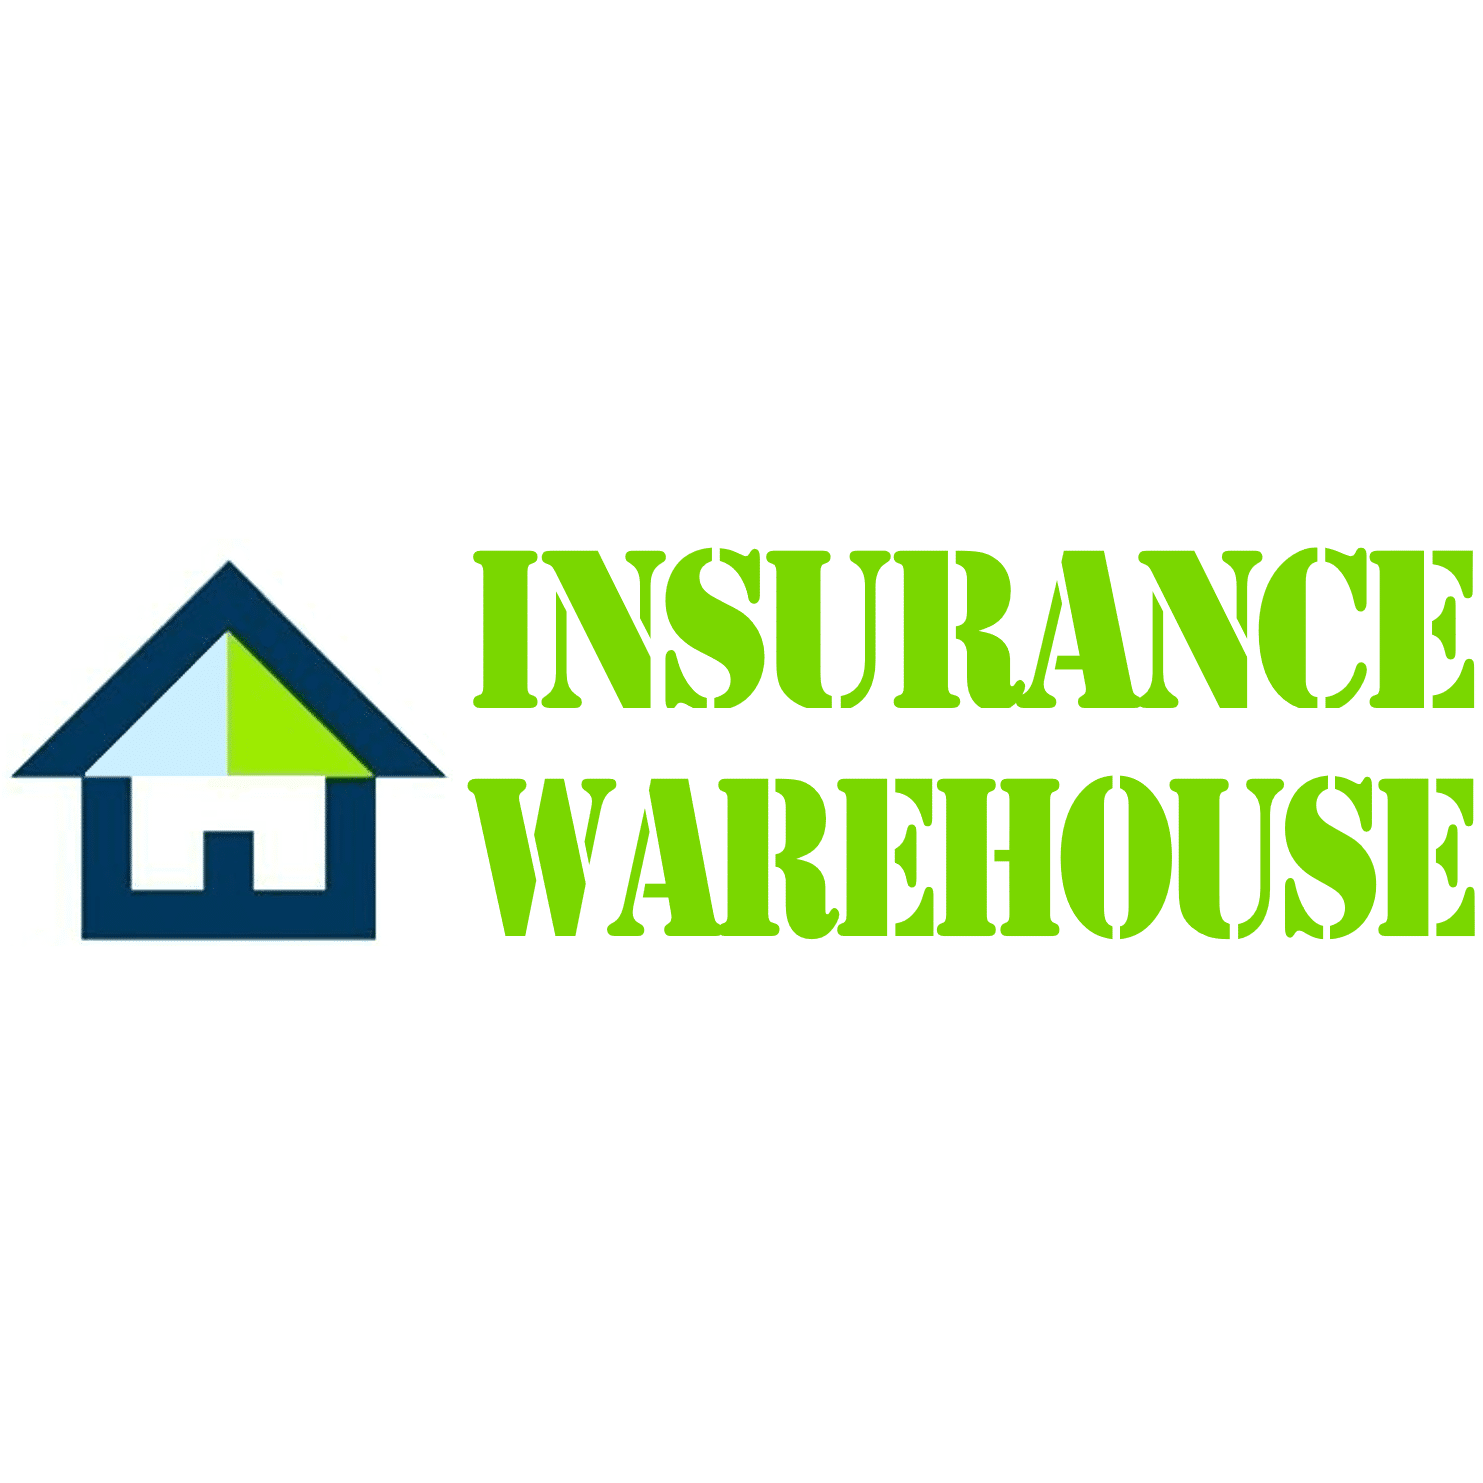 Insurance Warehouse in Monticello, Georgia website